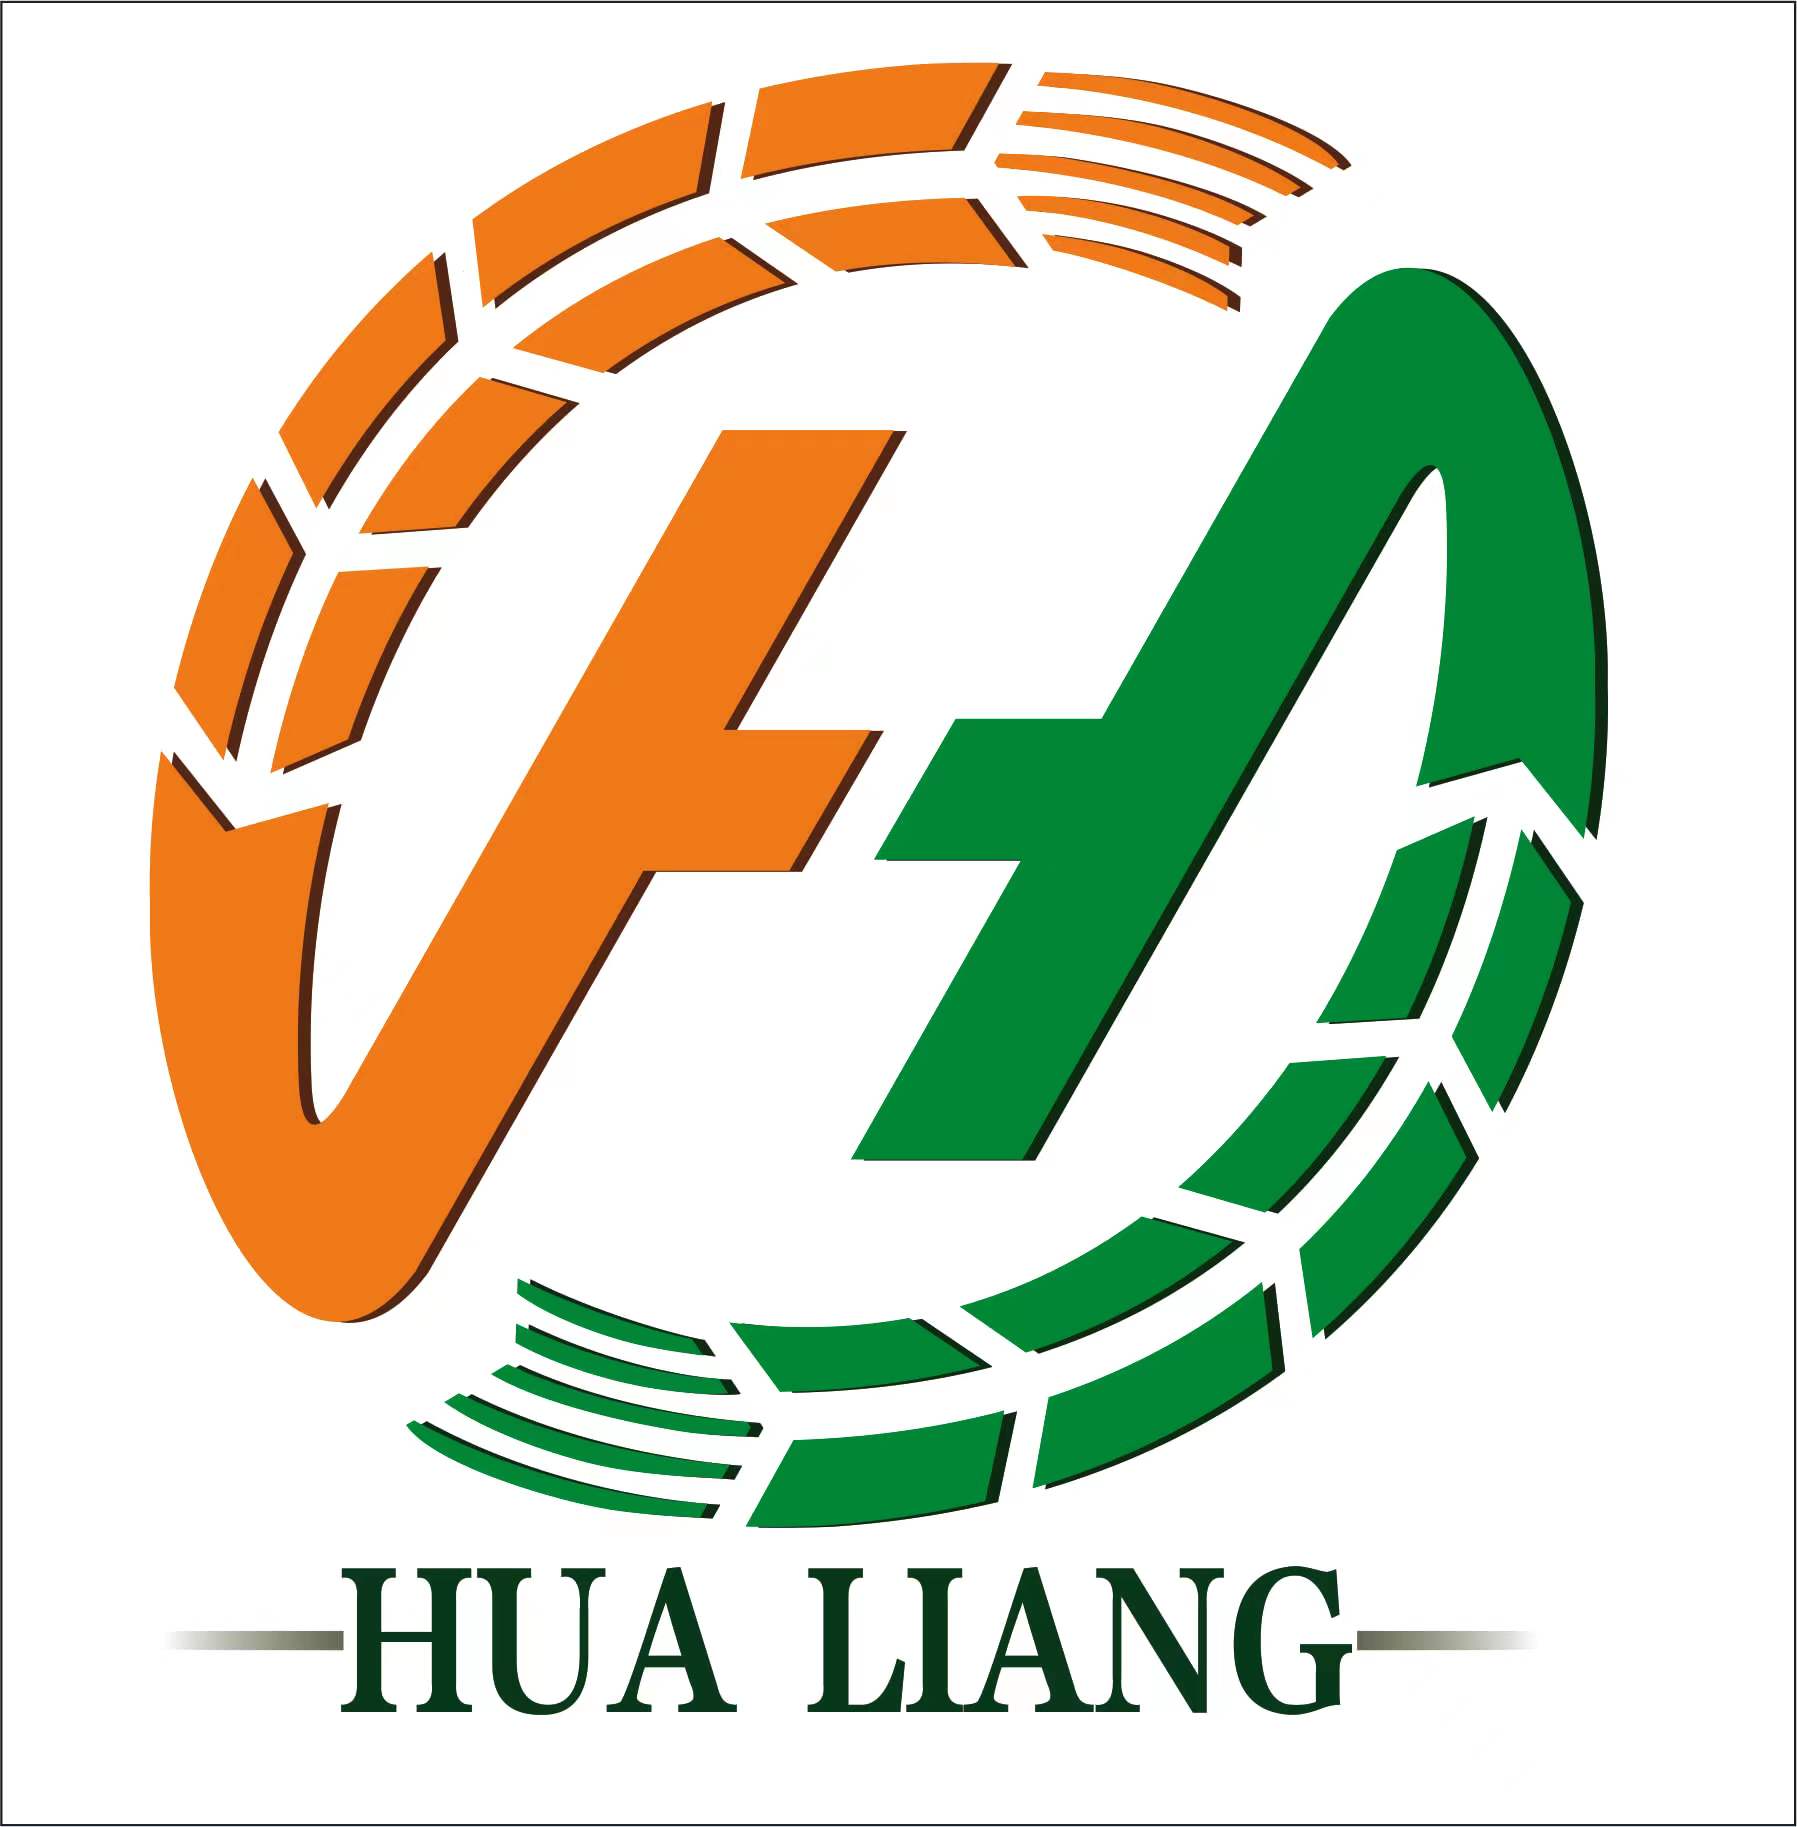 Henan Hualiang Machinery Co., Ltd